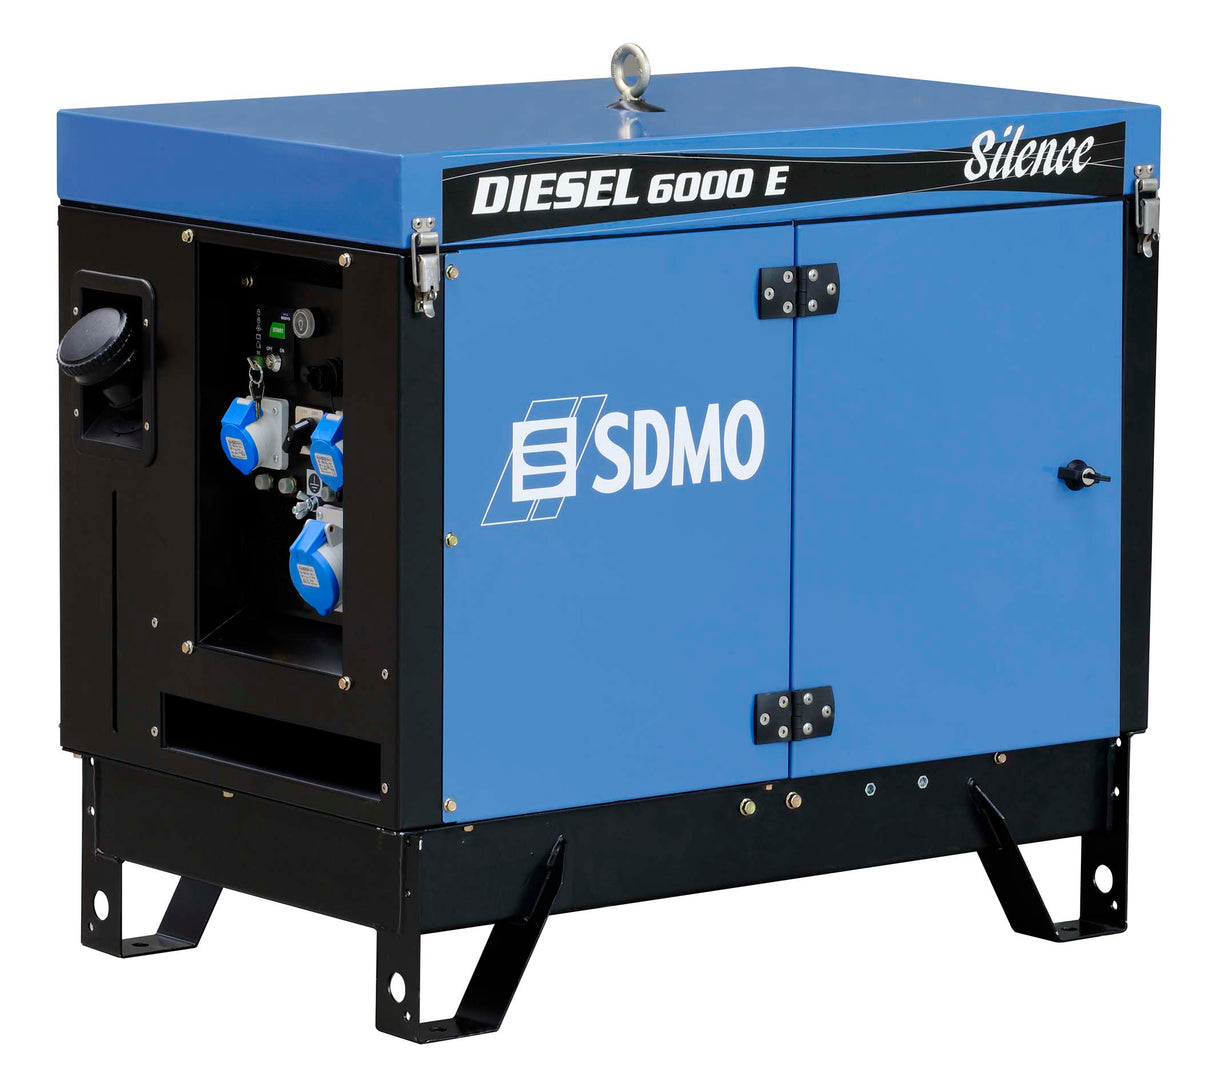 Power generator SDMO DIESEL 6000 A Silence AVR C5